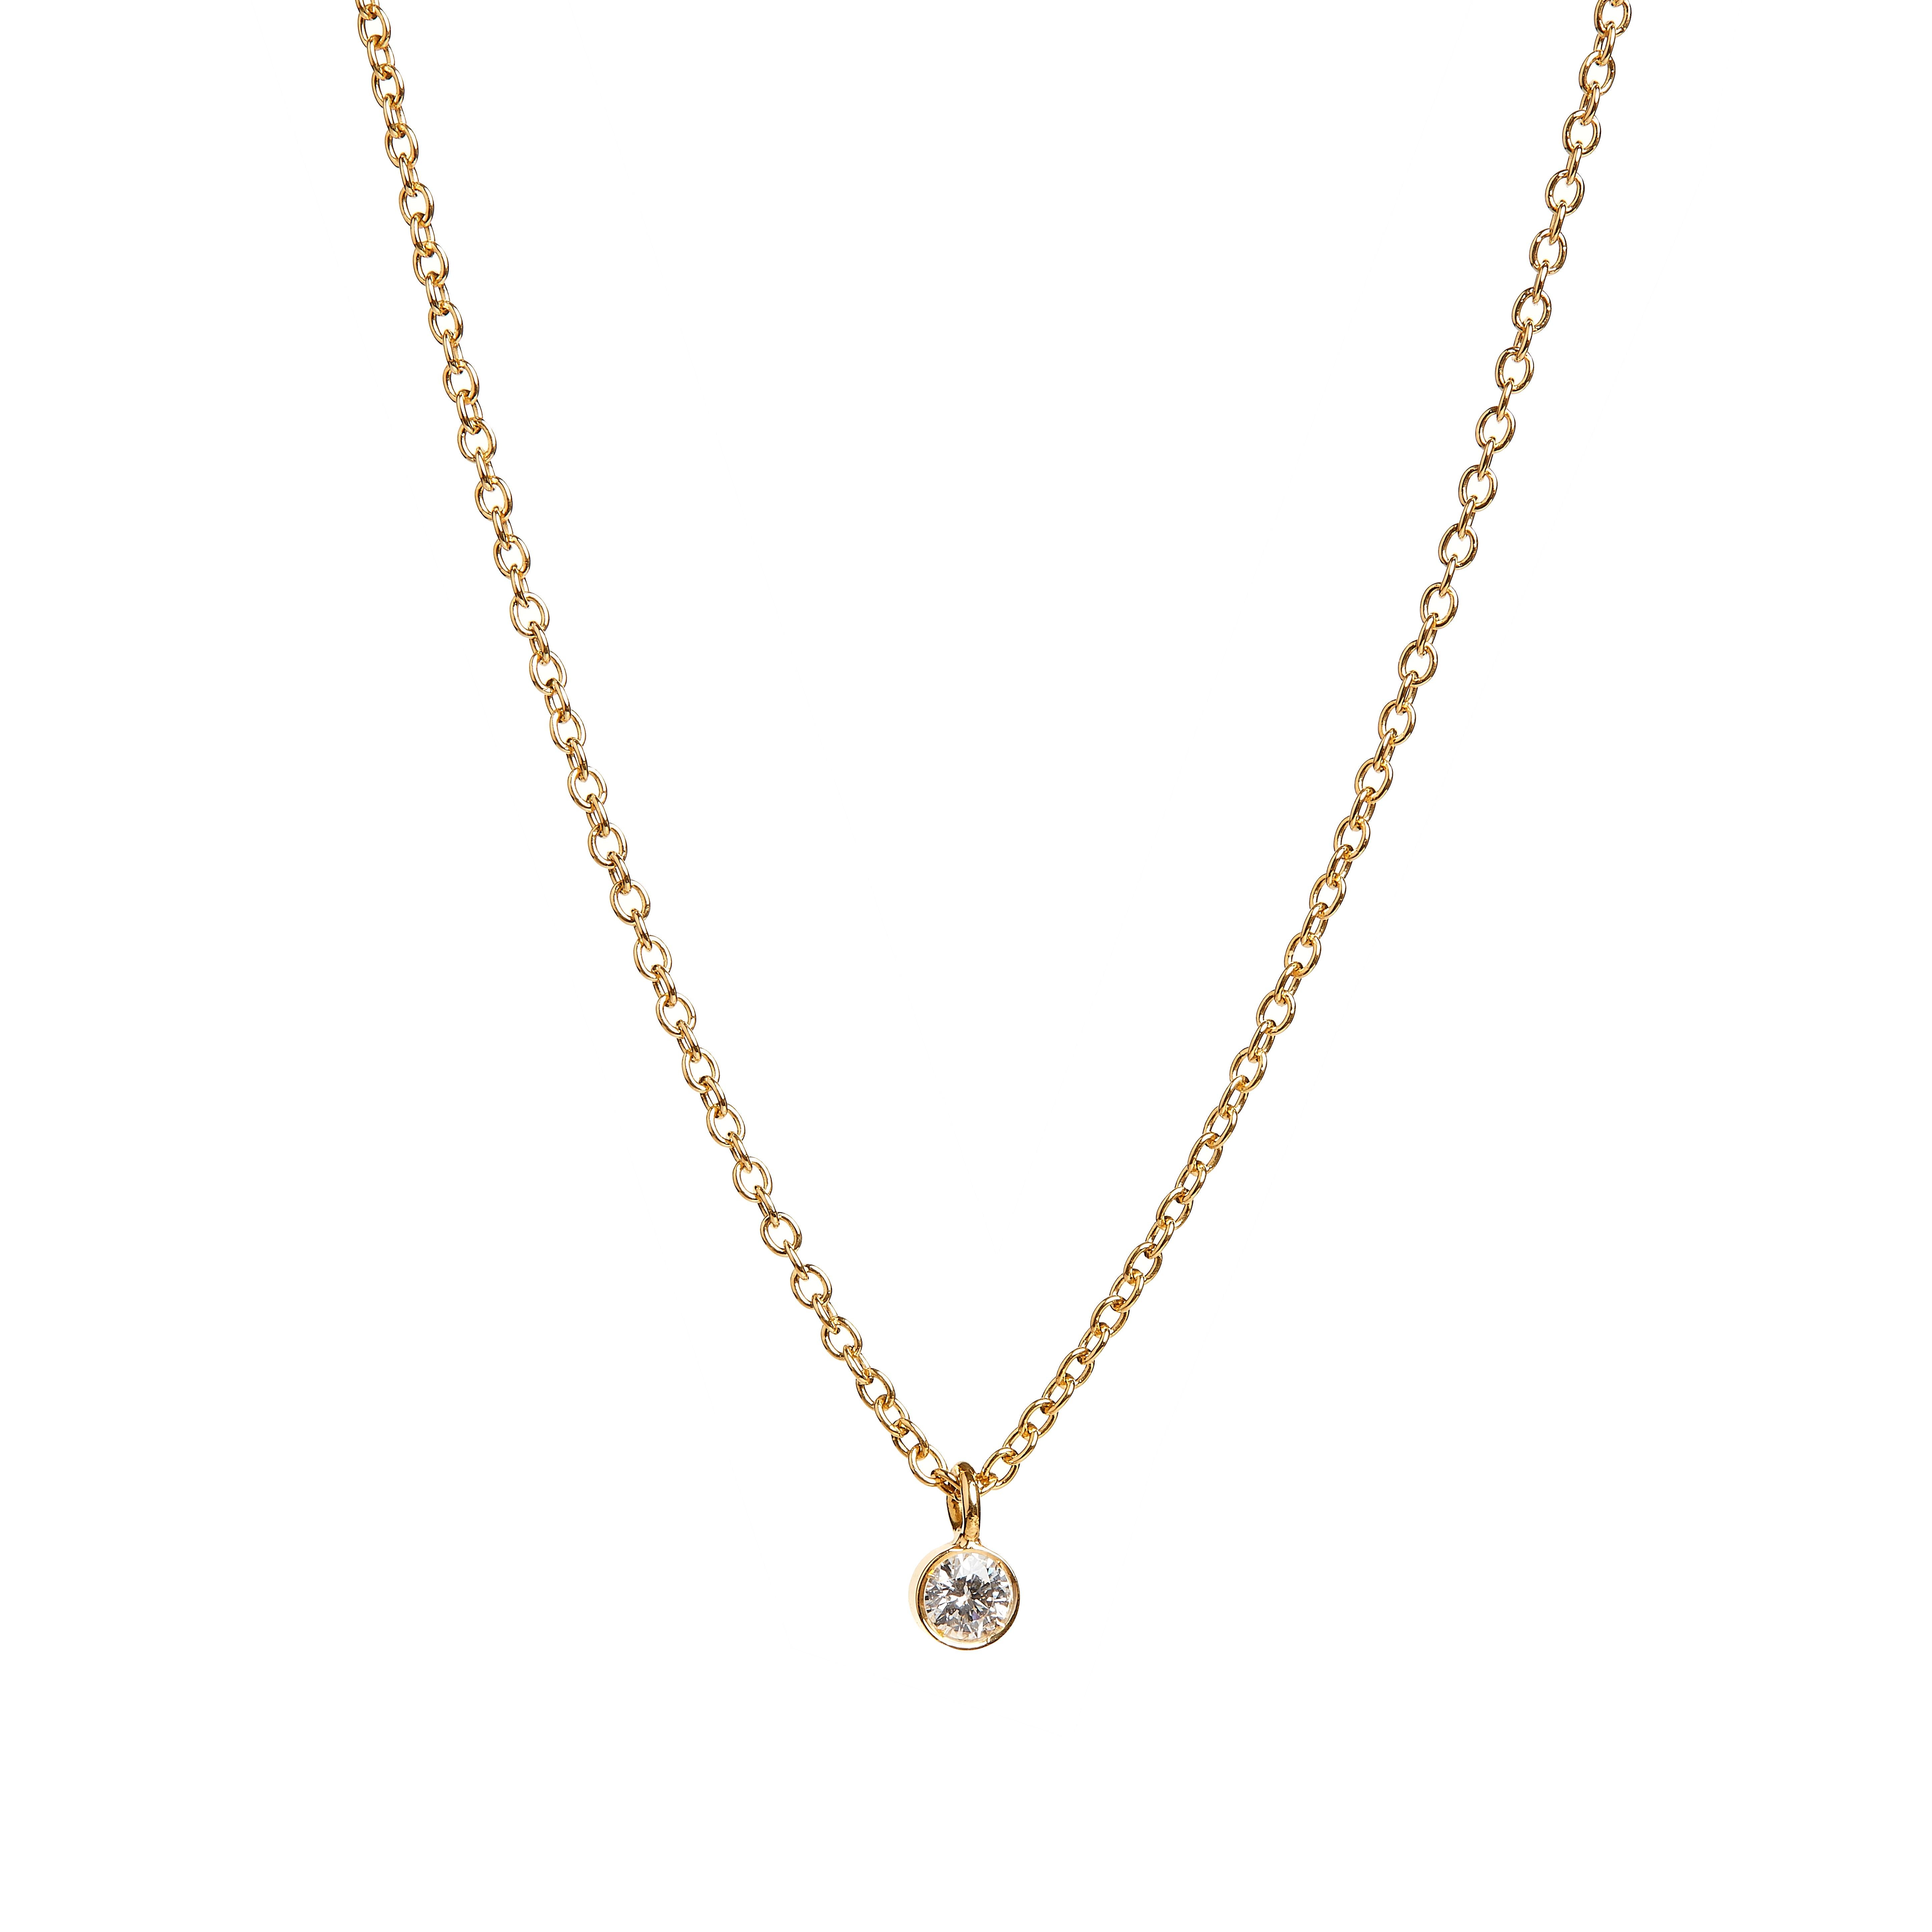 Nathalie Jean Contemporary 0.33 Carat Diamond Gold Pendant Chain Necklace For Sale 4